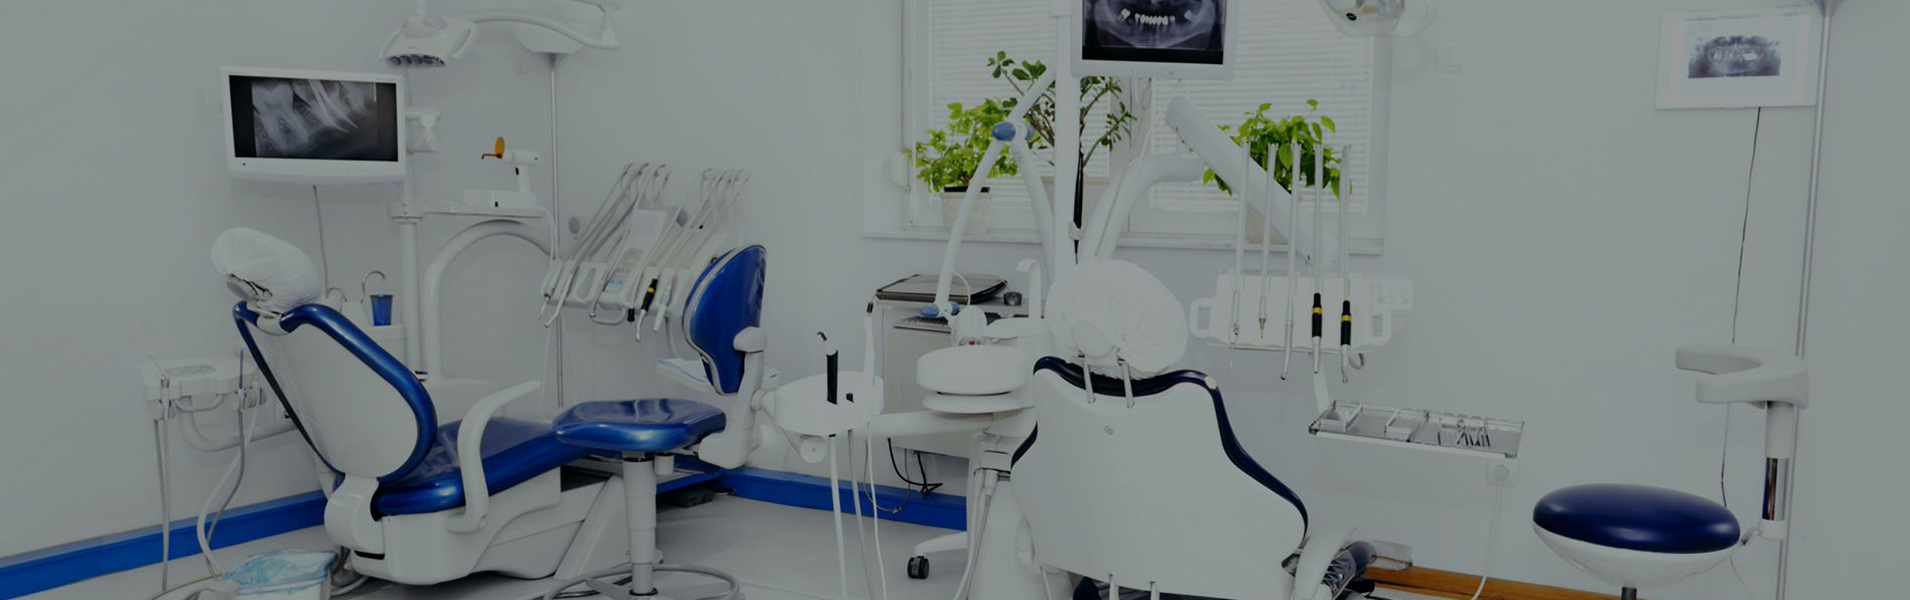 best dental clinic in hyderabad